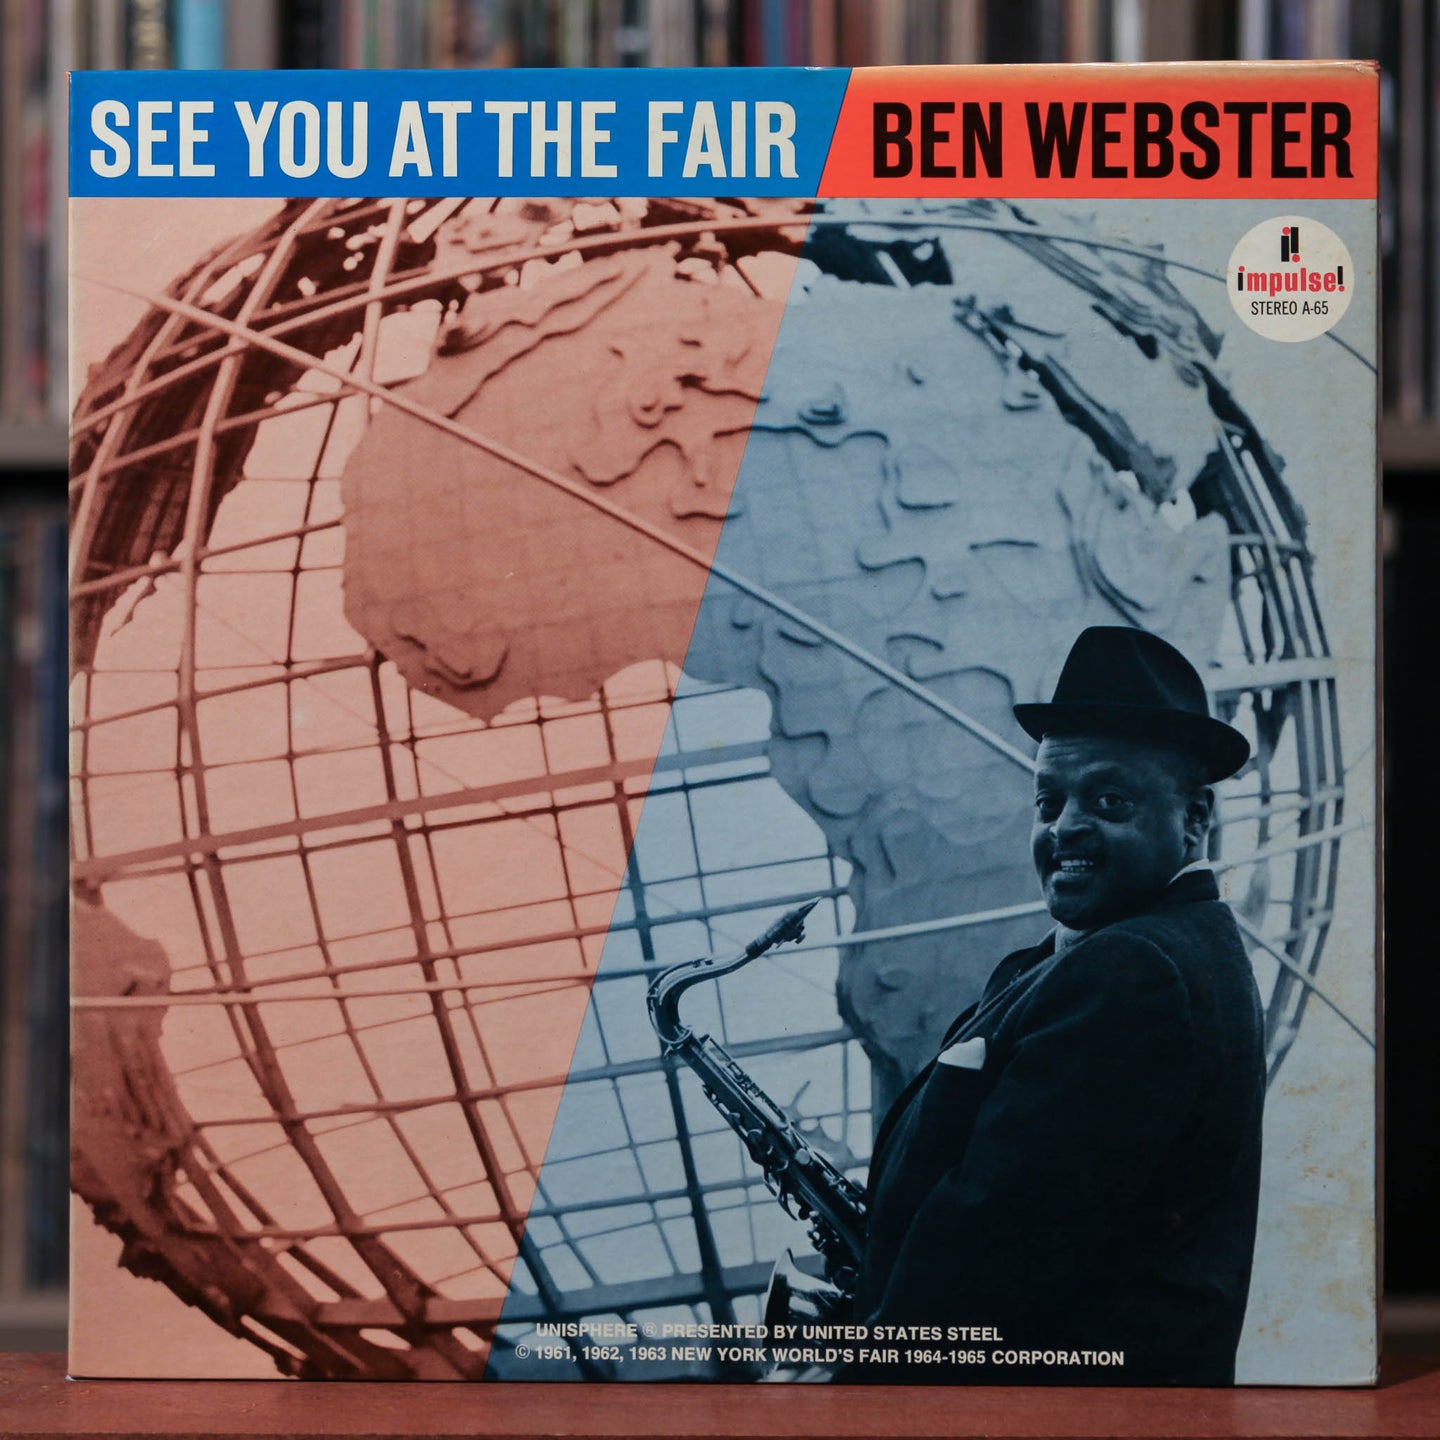 Ben Webster - See You at the Fair - 1964 Implulse, VG+/VG+